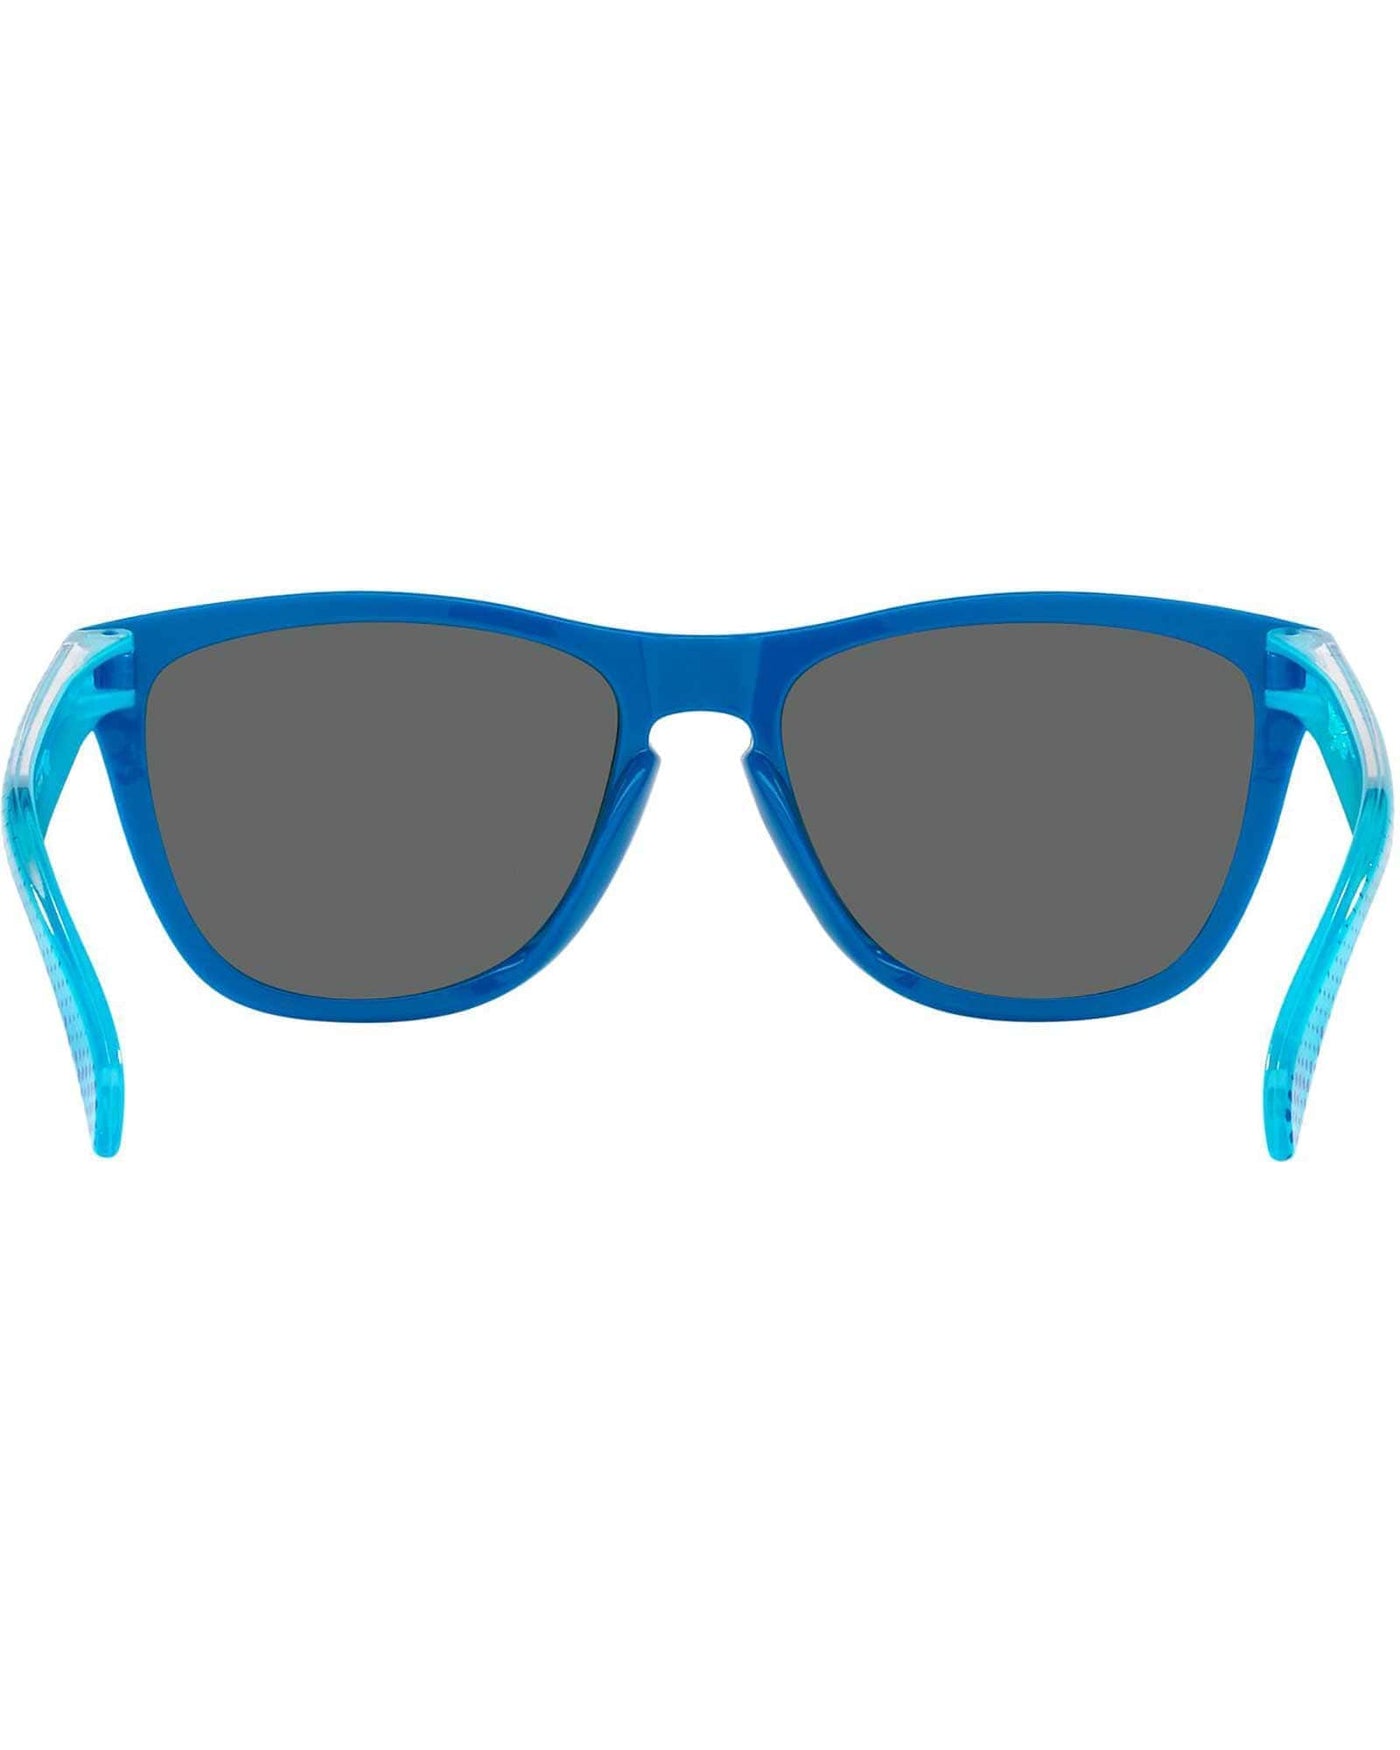 Oakley Frogskins Sunglasses (Hi Res Blue with Prizm Black) OAKLEY